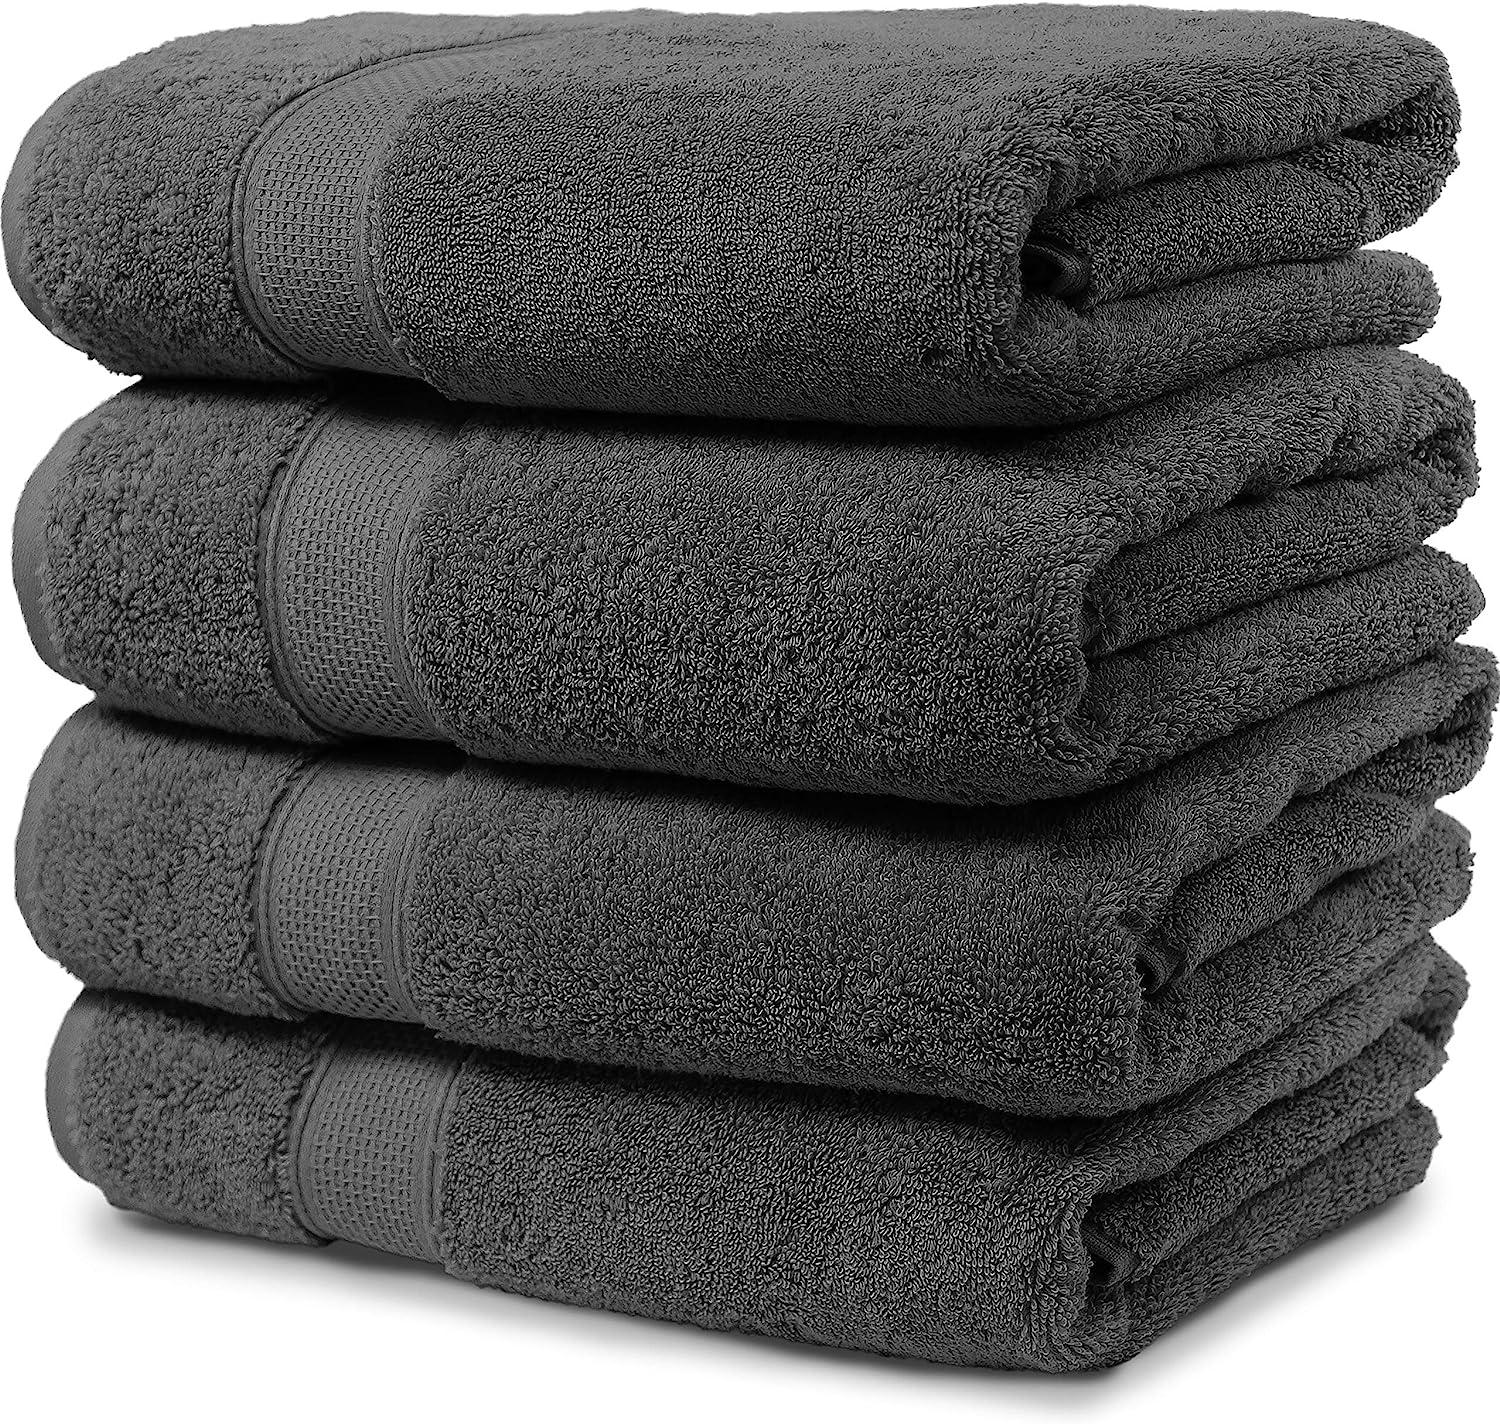 4 Pack Bath Towel Set, 100% Turkish Cotton Bath Towels for Bathroom, Super Soft, Extra Large Bath Towels Black